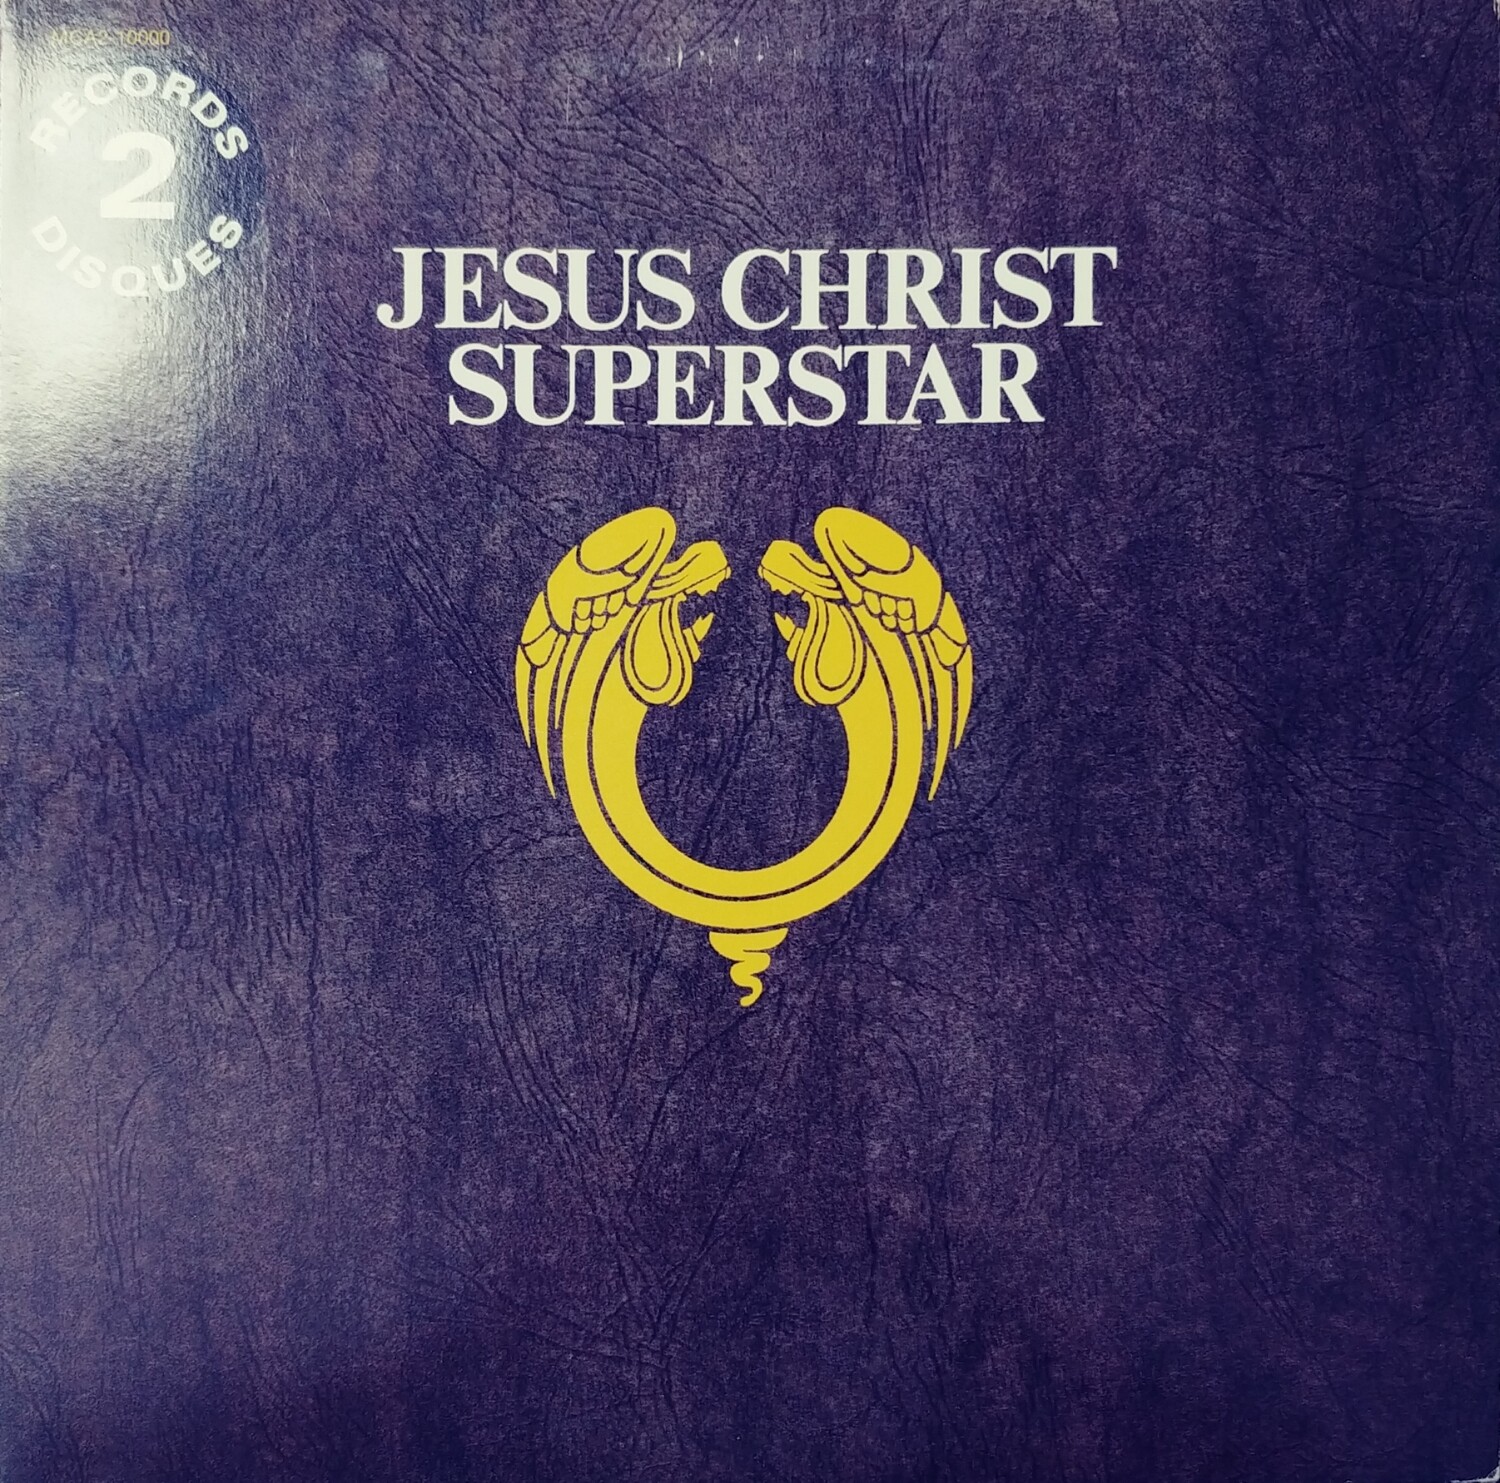 Jesus Christ Superstar A rock opera